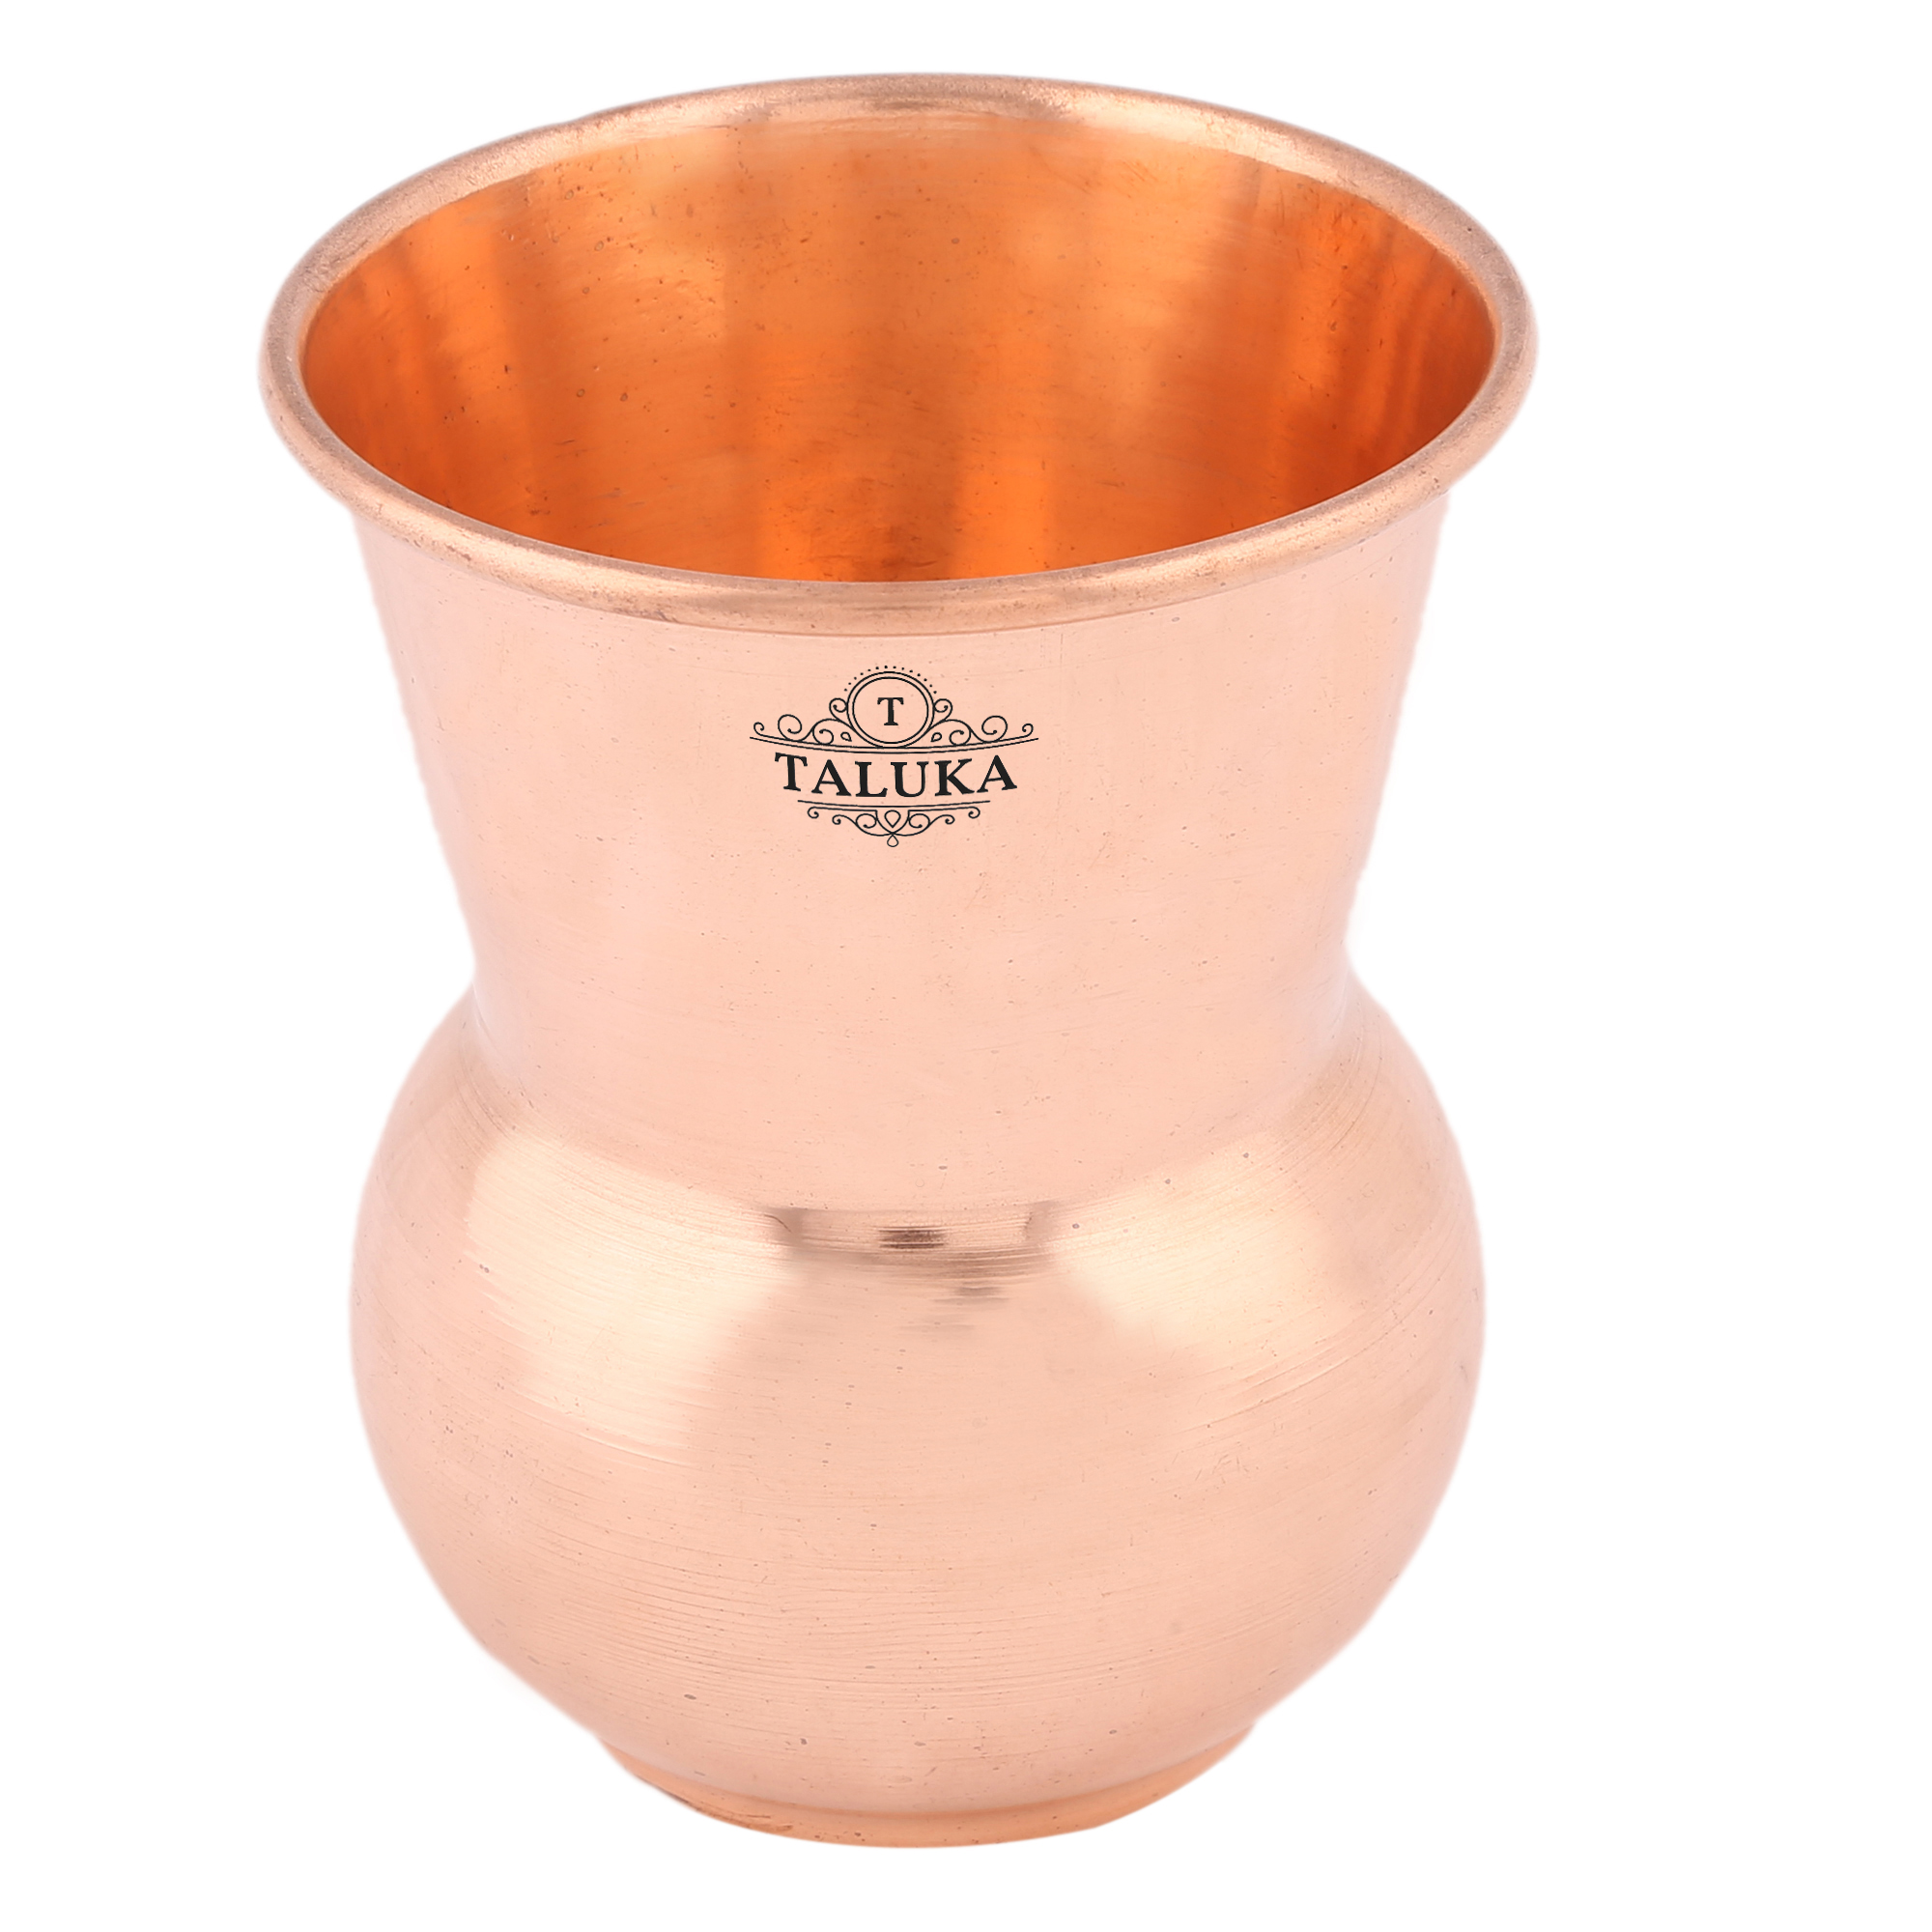 Handmade Copper Plain Glass Cup/Tumbler